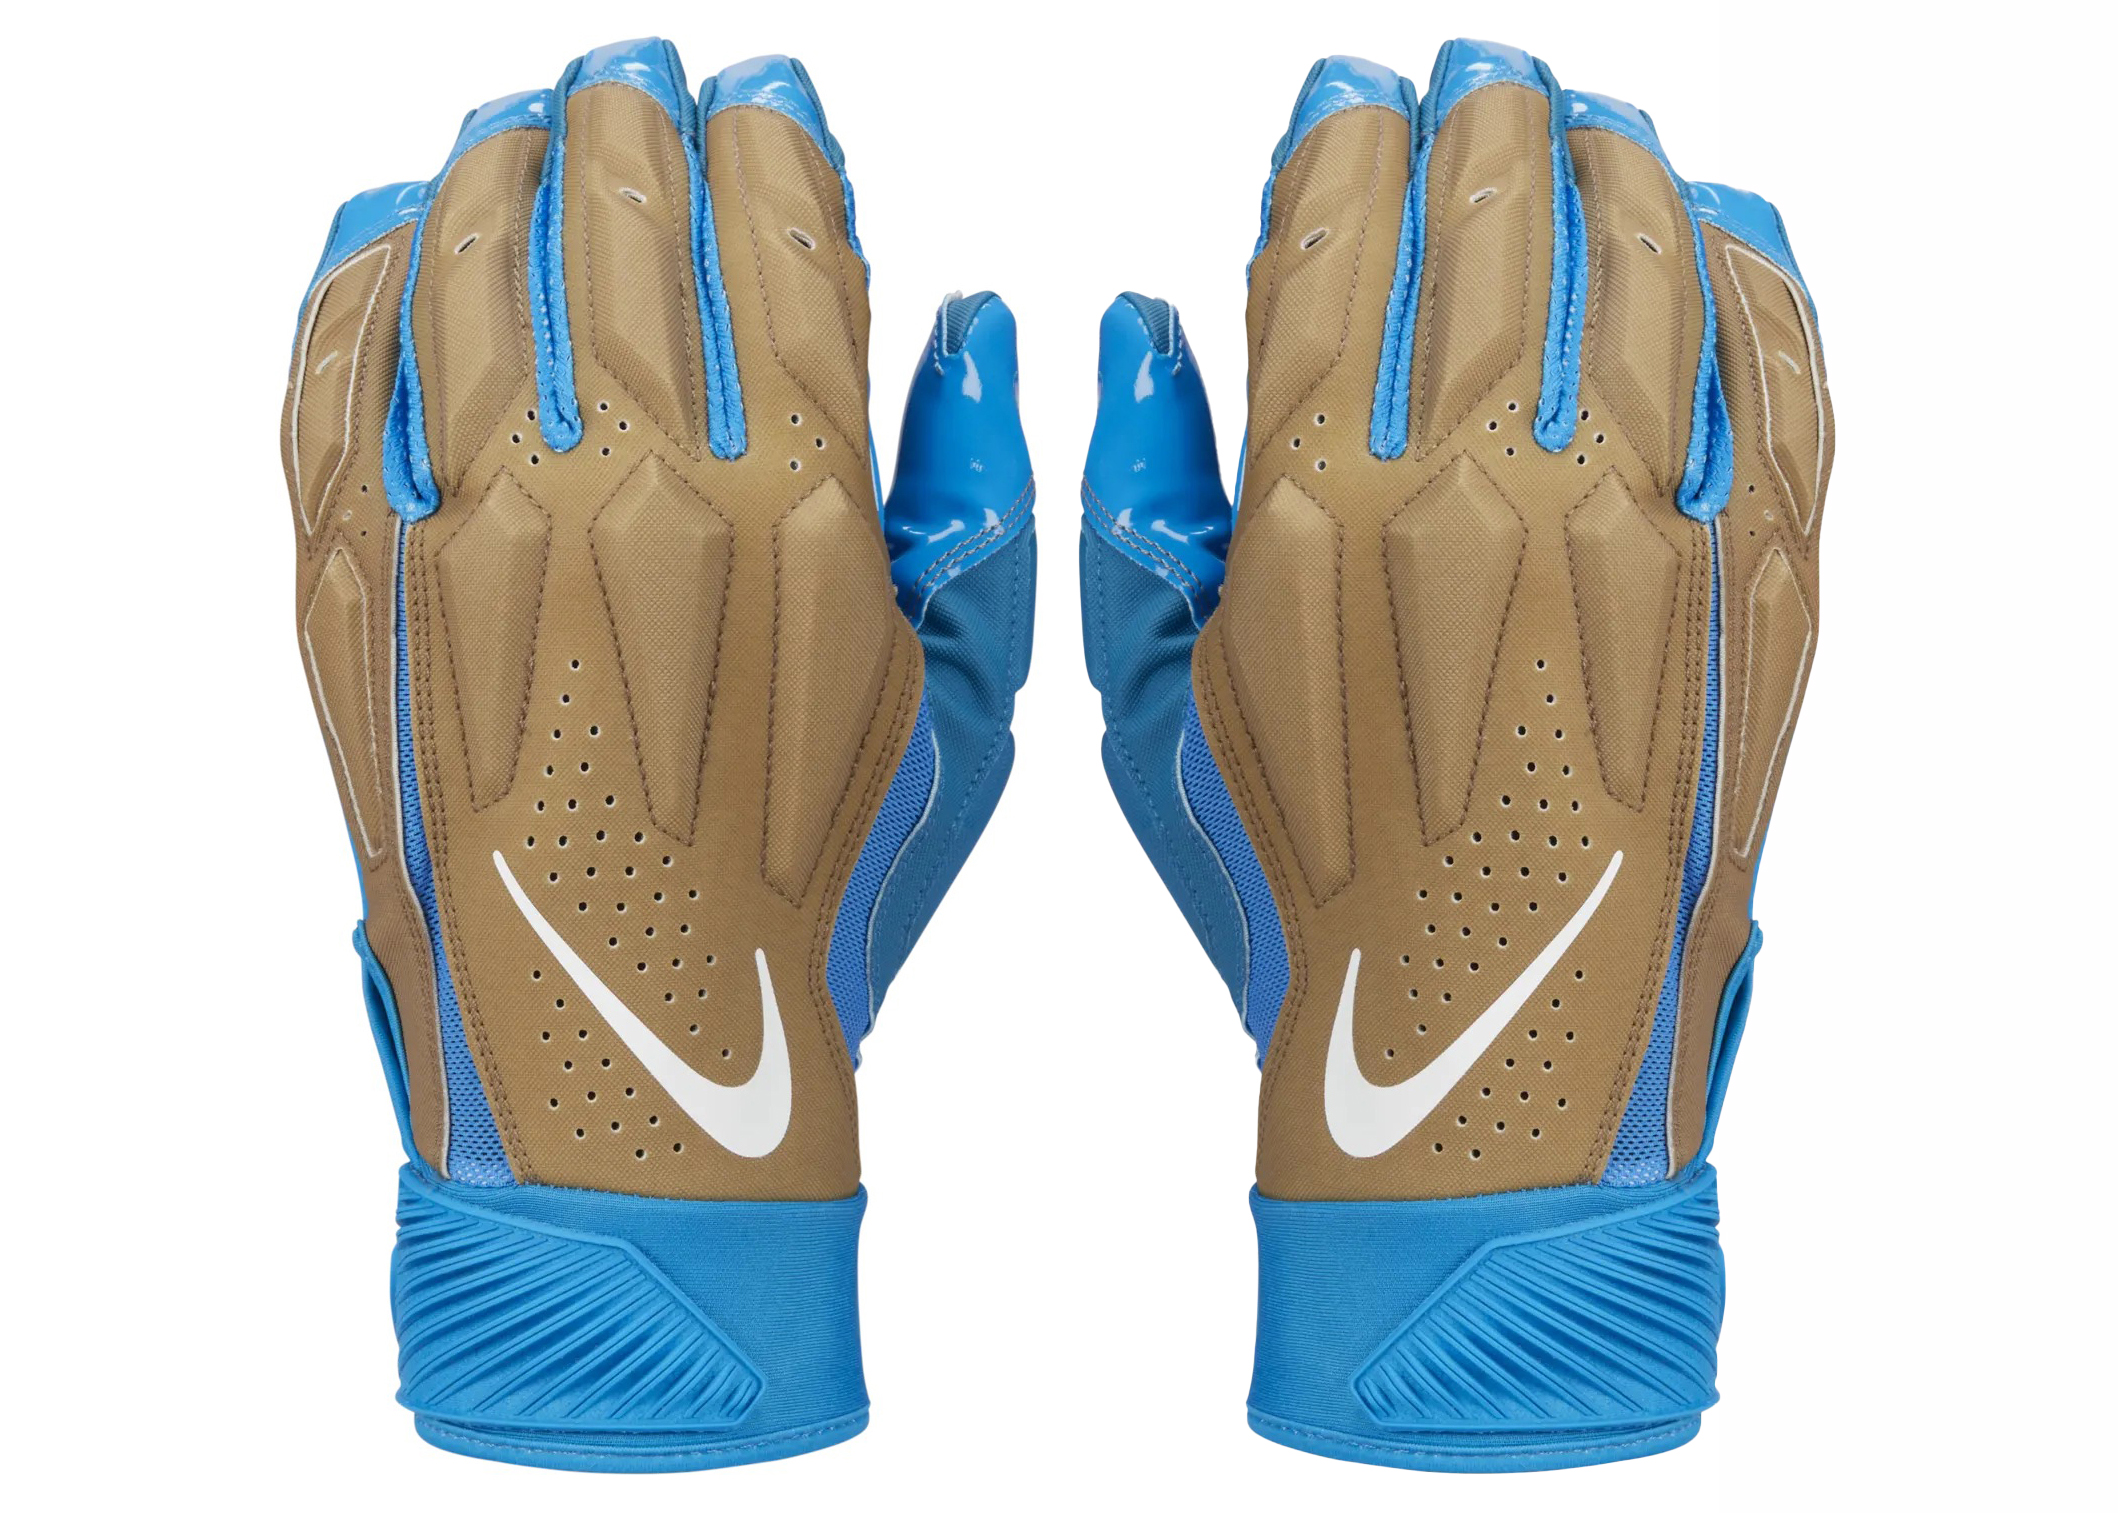 Football Gloves Nikecom